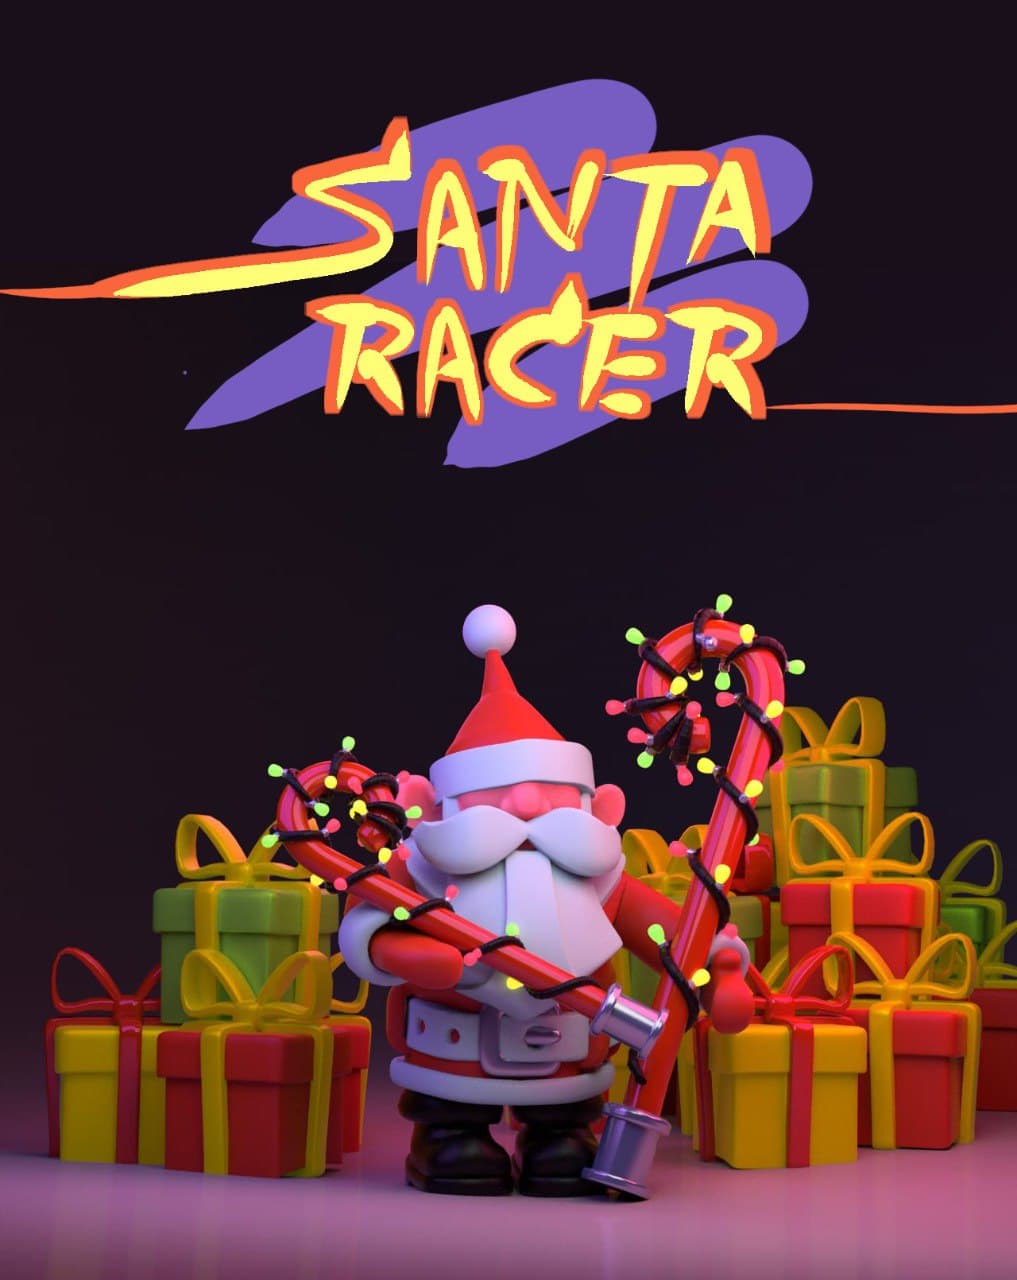 Santa Racer - Christmas 2022 for Android